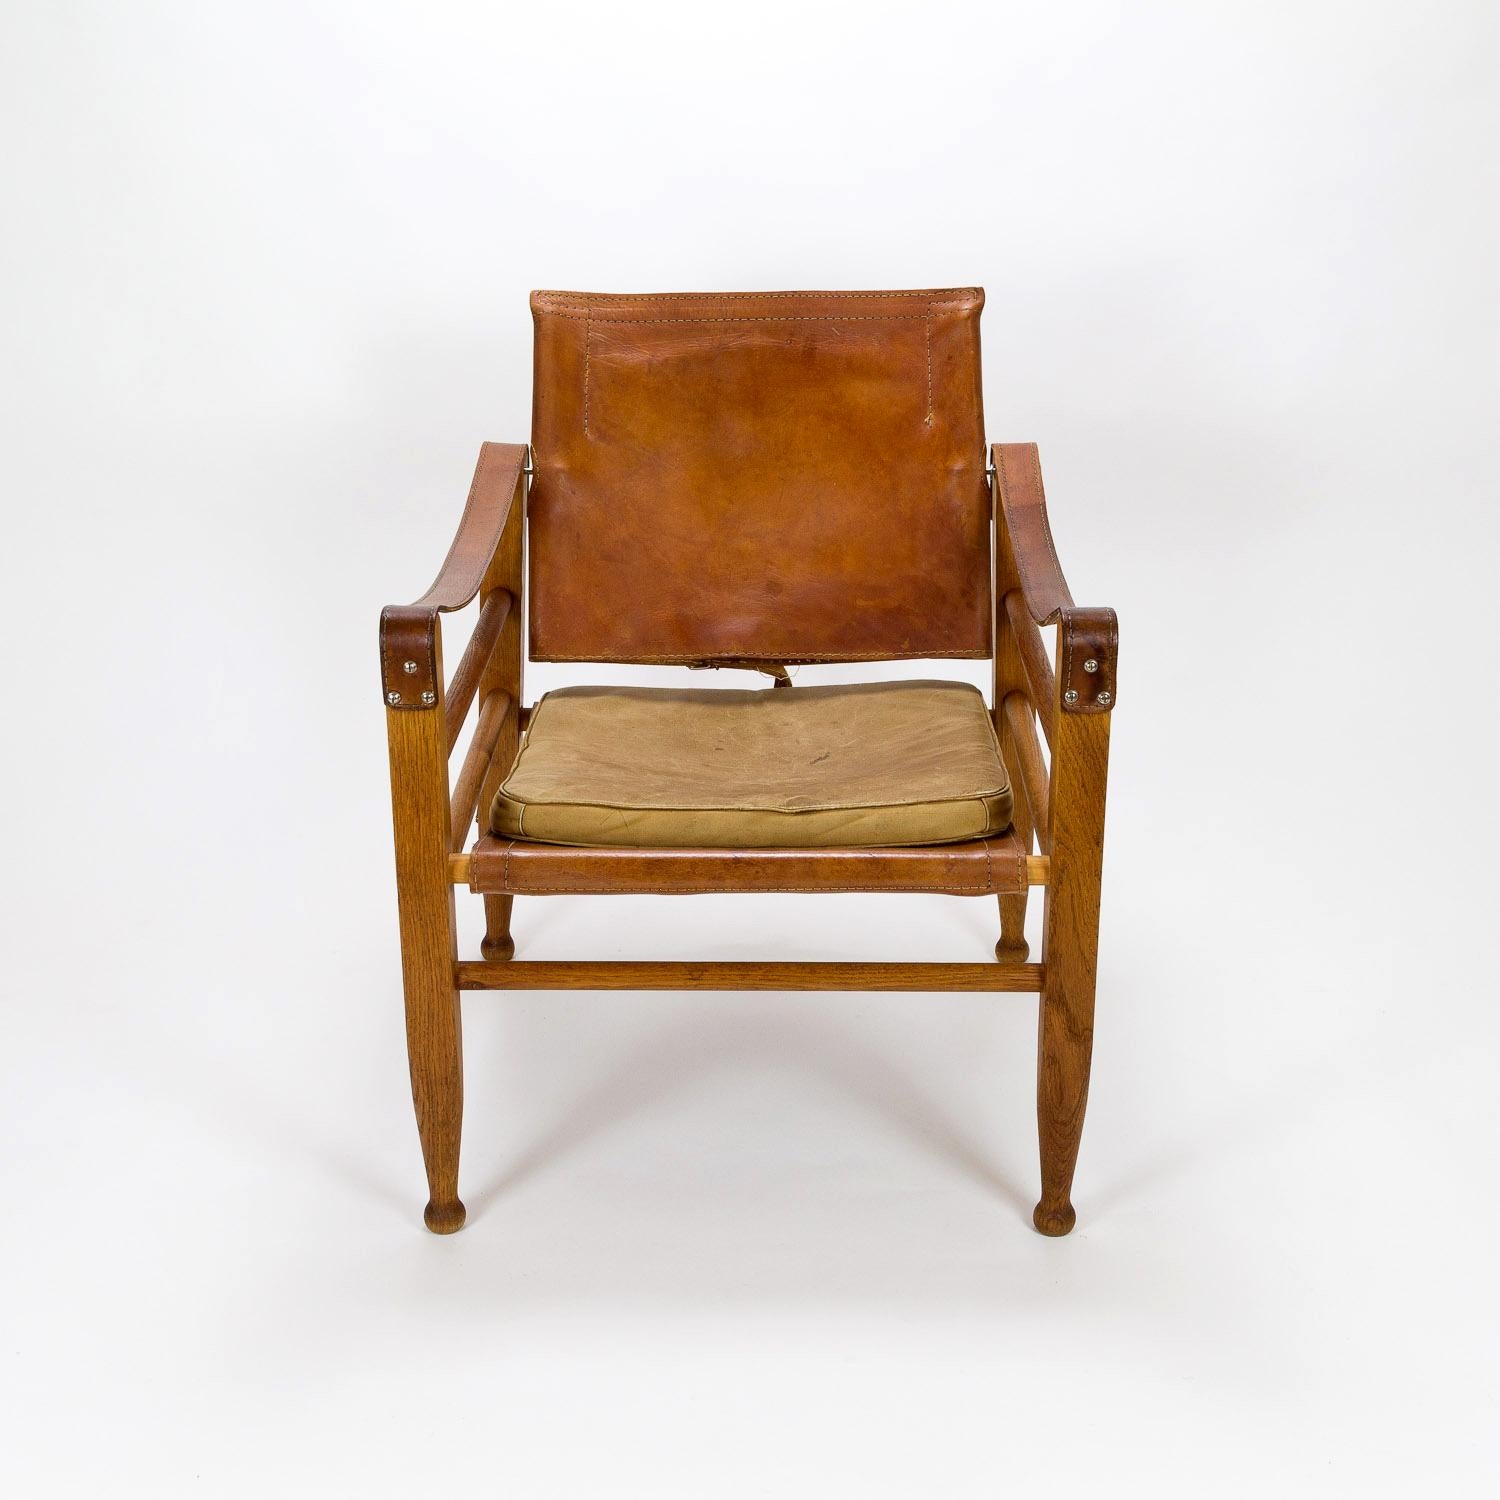 Leather Pair of Midcentury Aage Bruun Safari Chairs, Denmark, 1960s